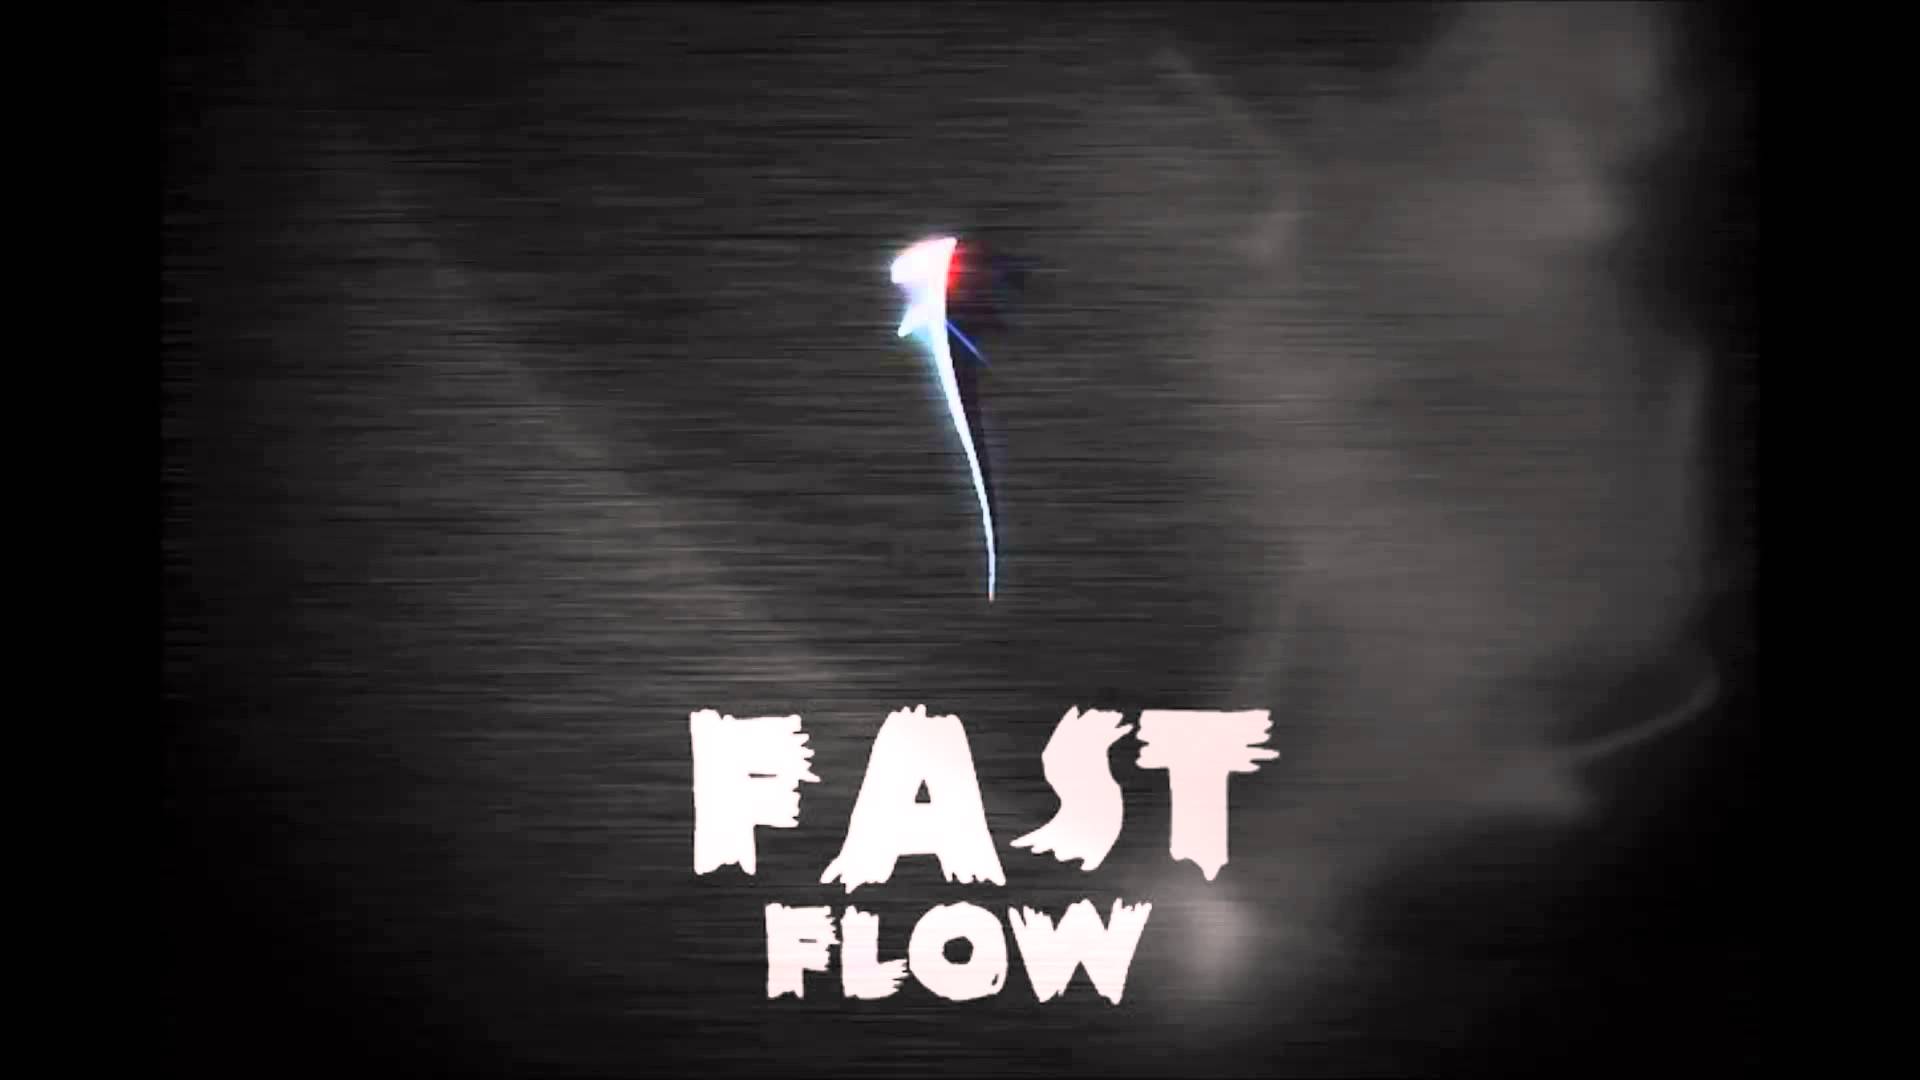 Fast flow photo